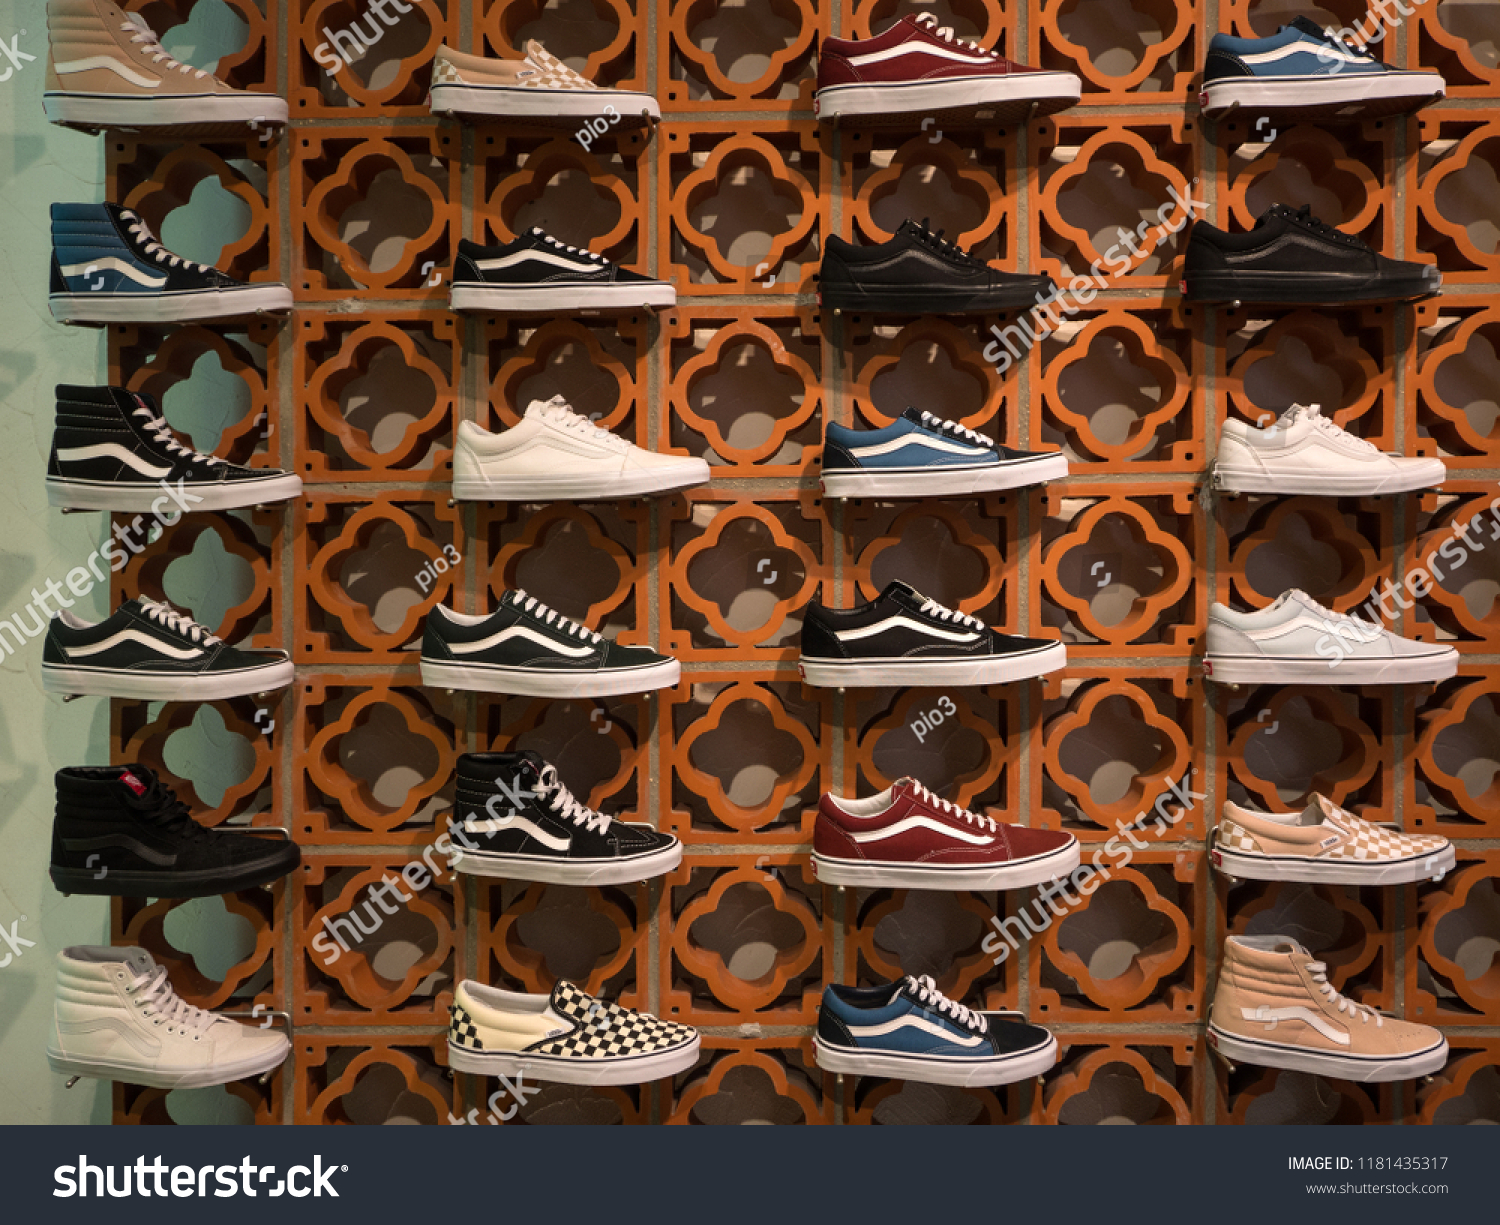 vans shoes retailers